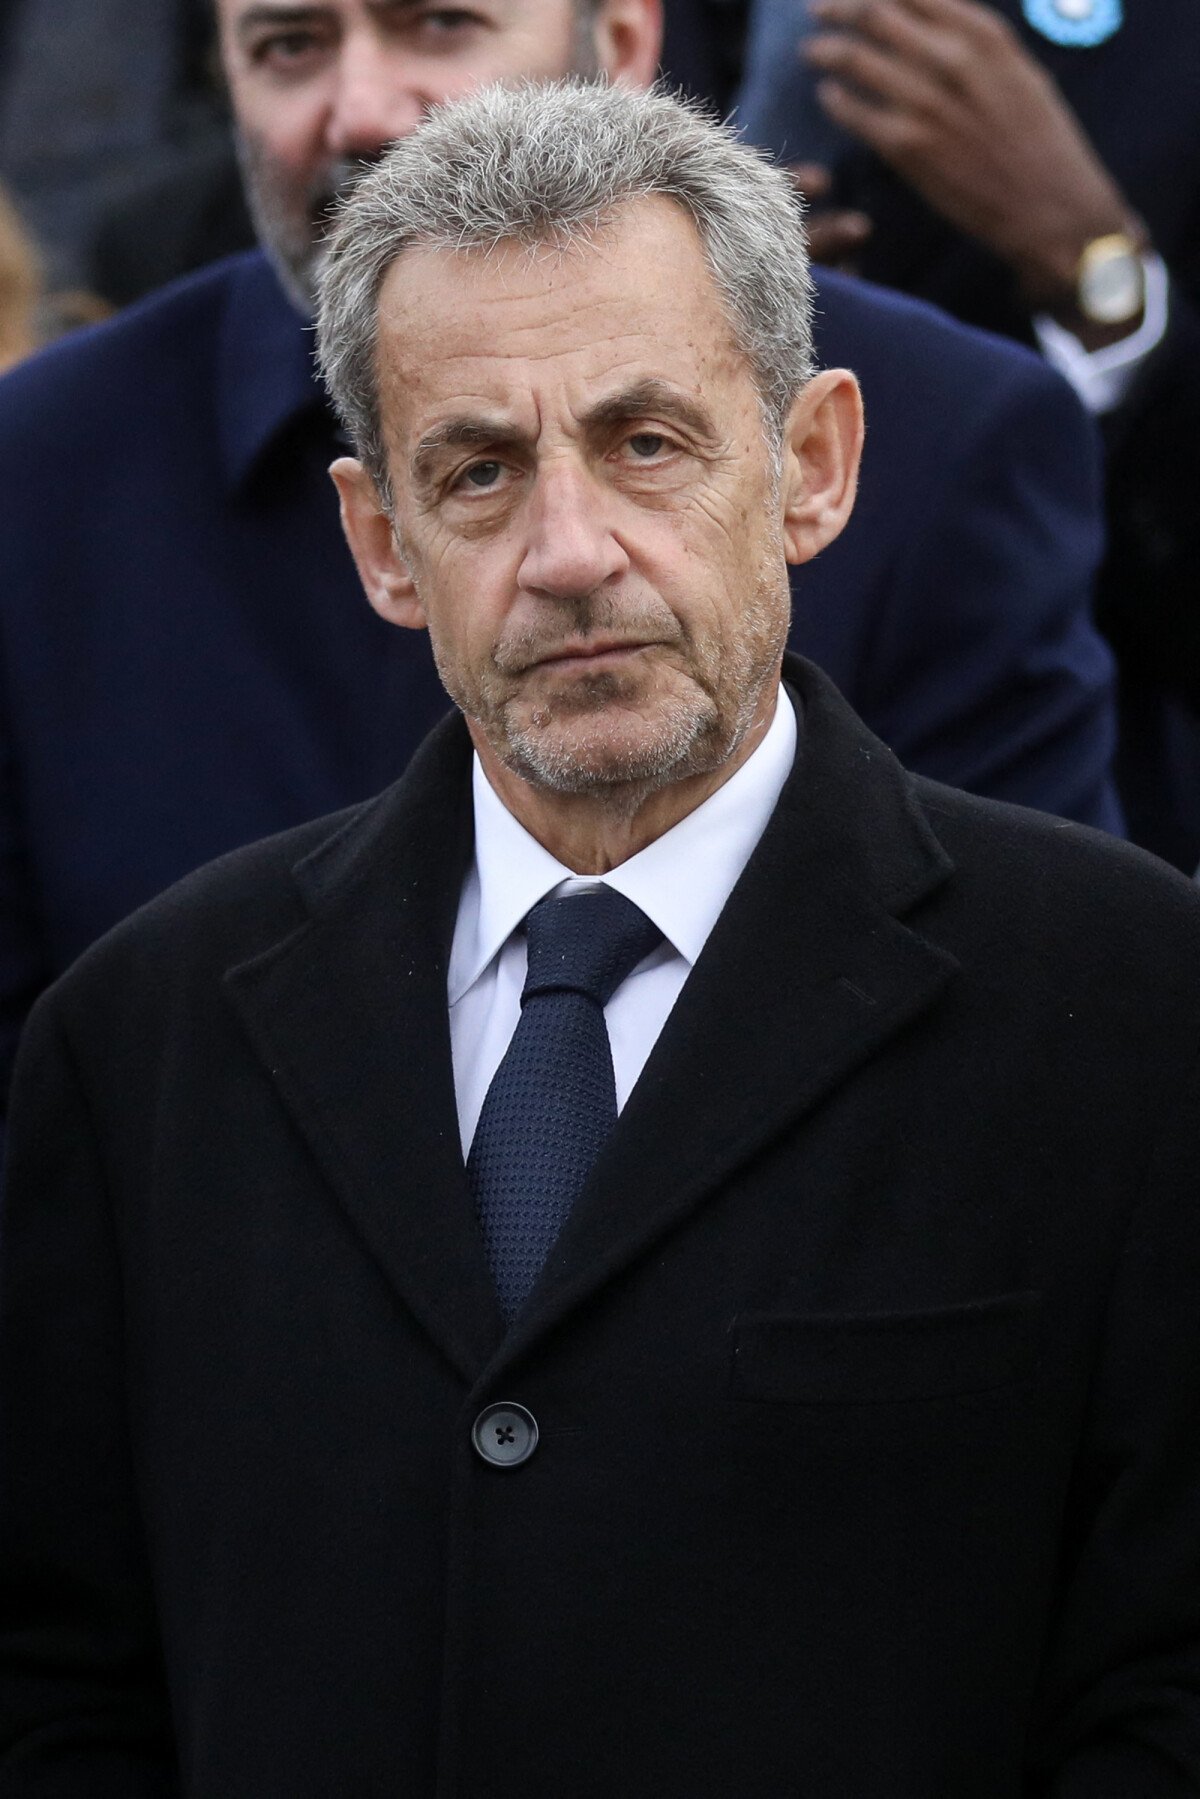 Nicolas Sarkozy éléction présidentielle 2022, candidat